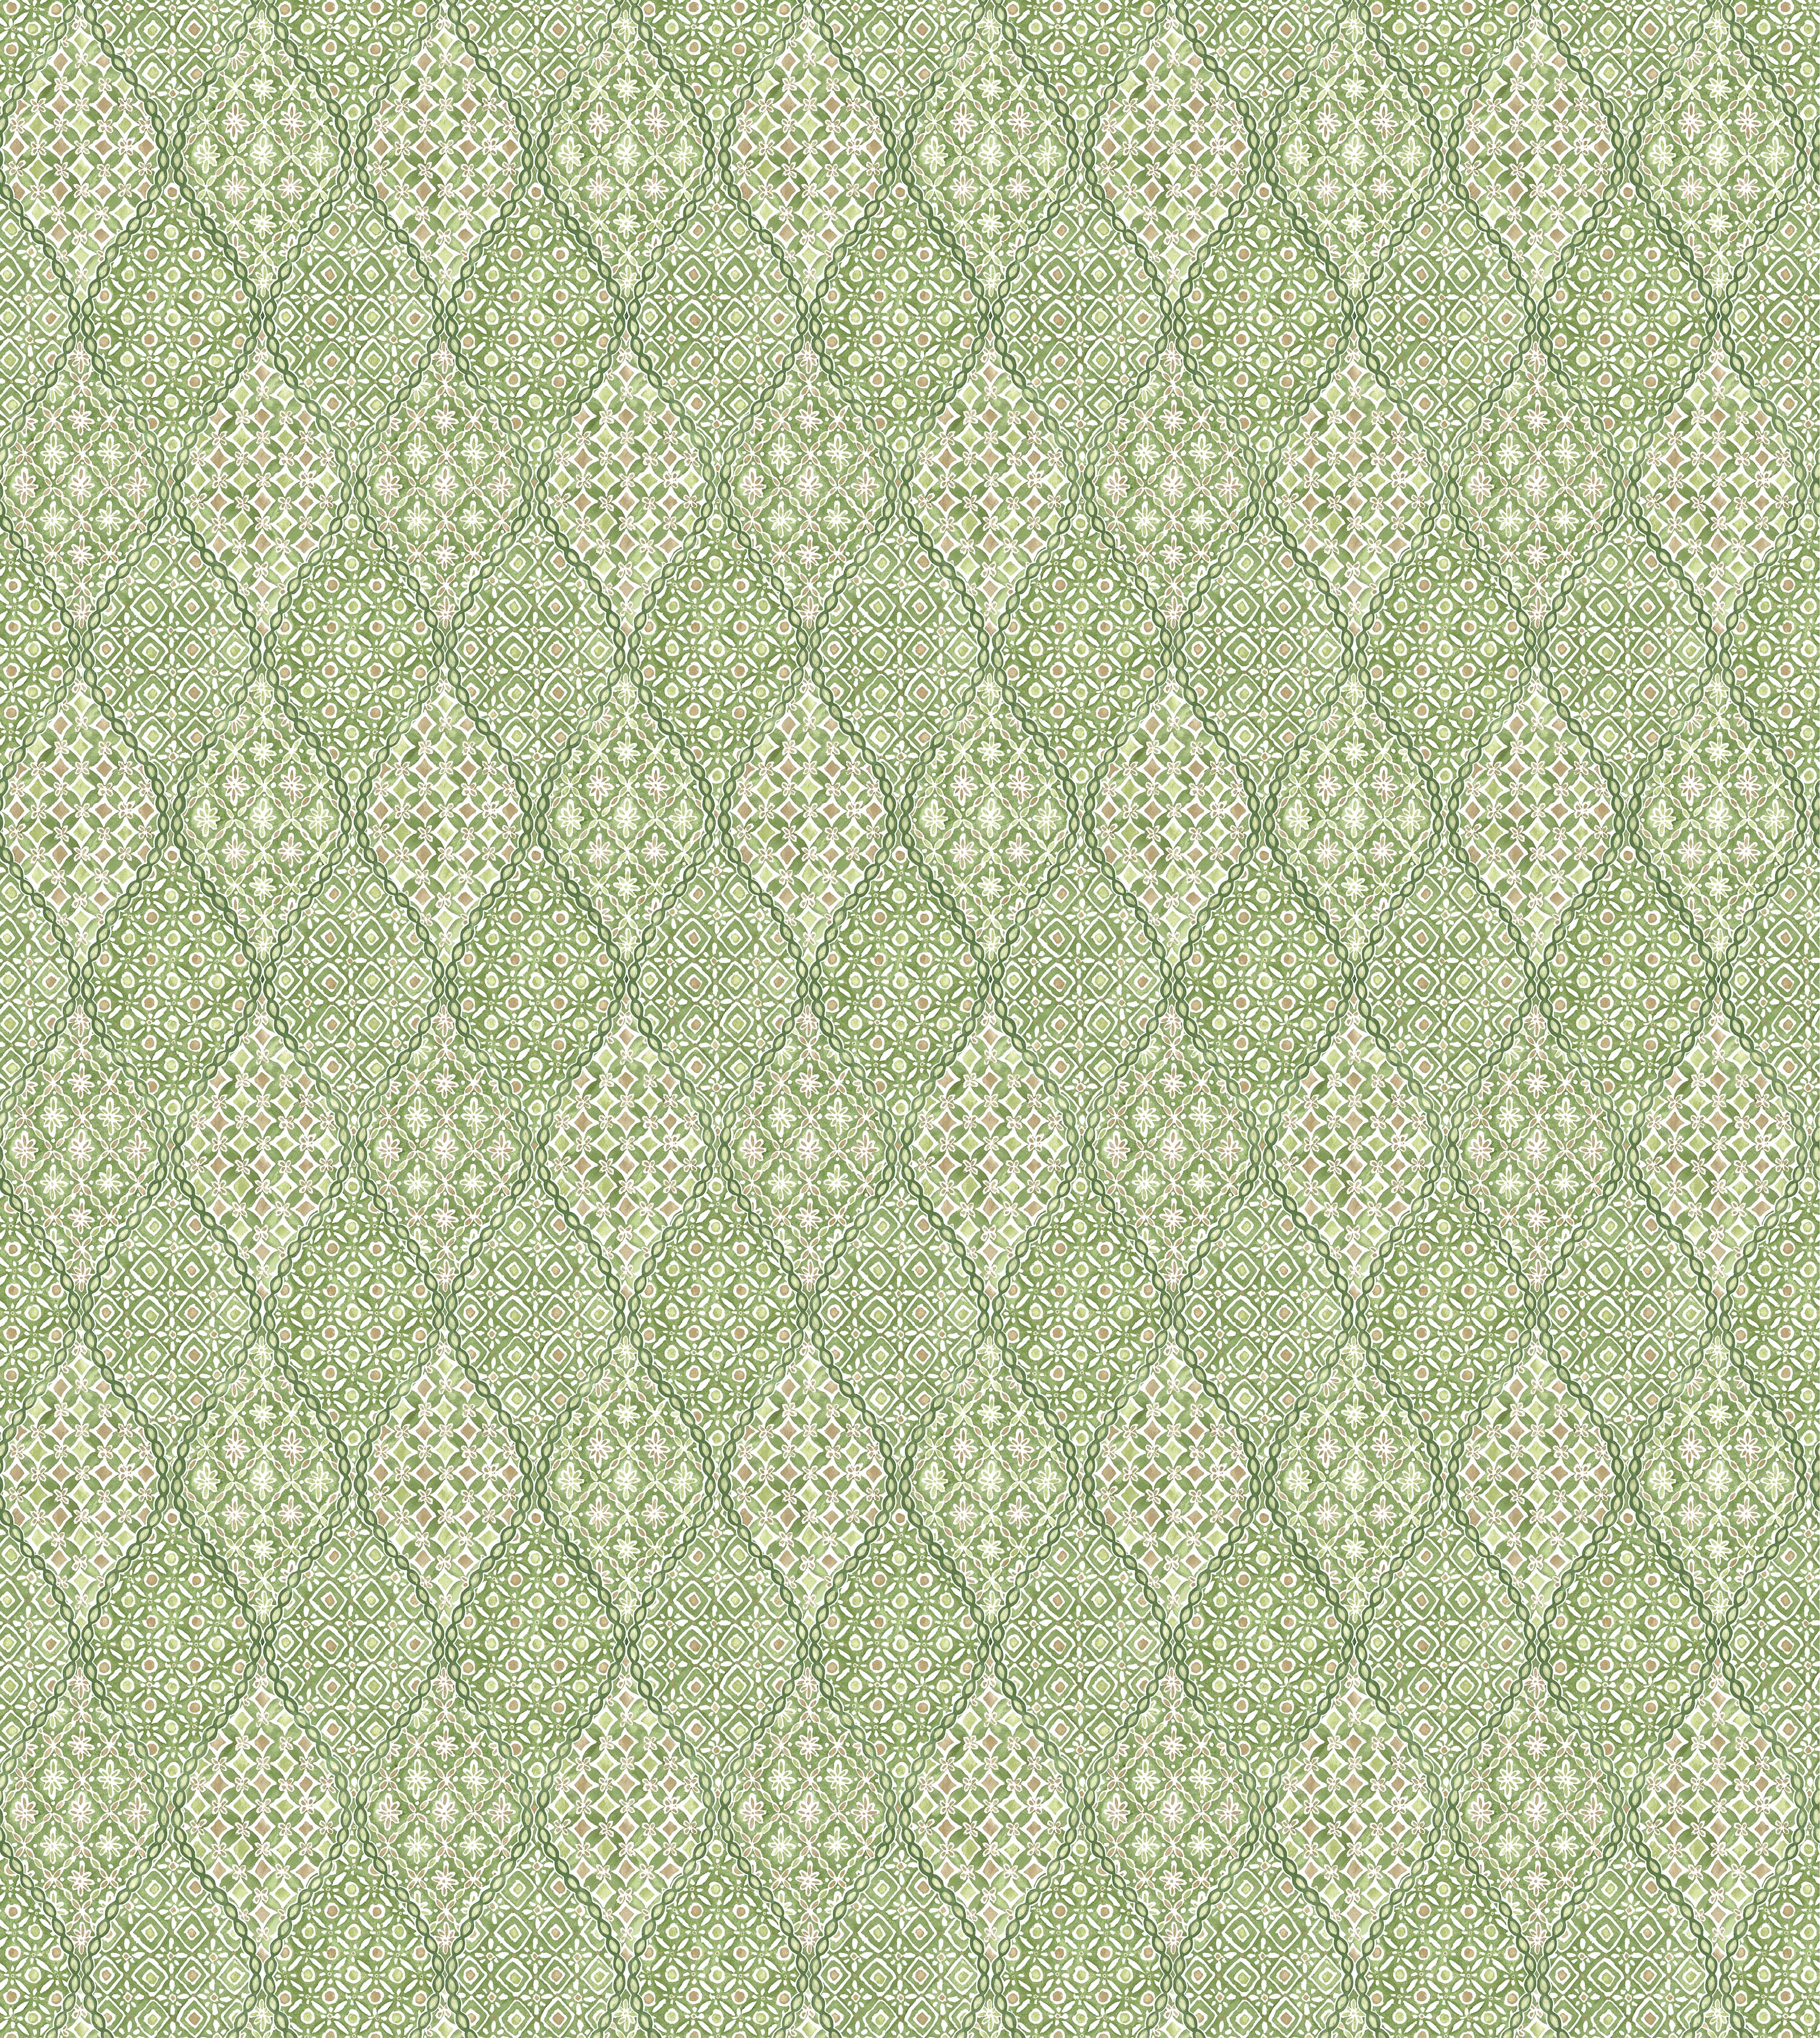 Nina Campbell Fabric - Jardiniere Coudreau NCF4461-04